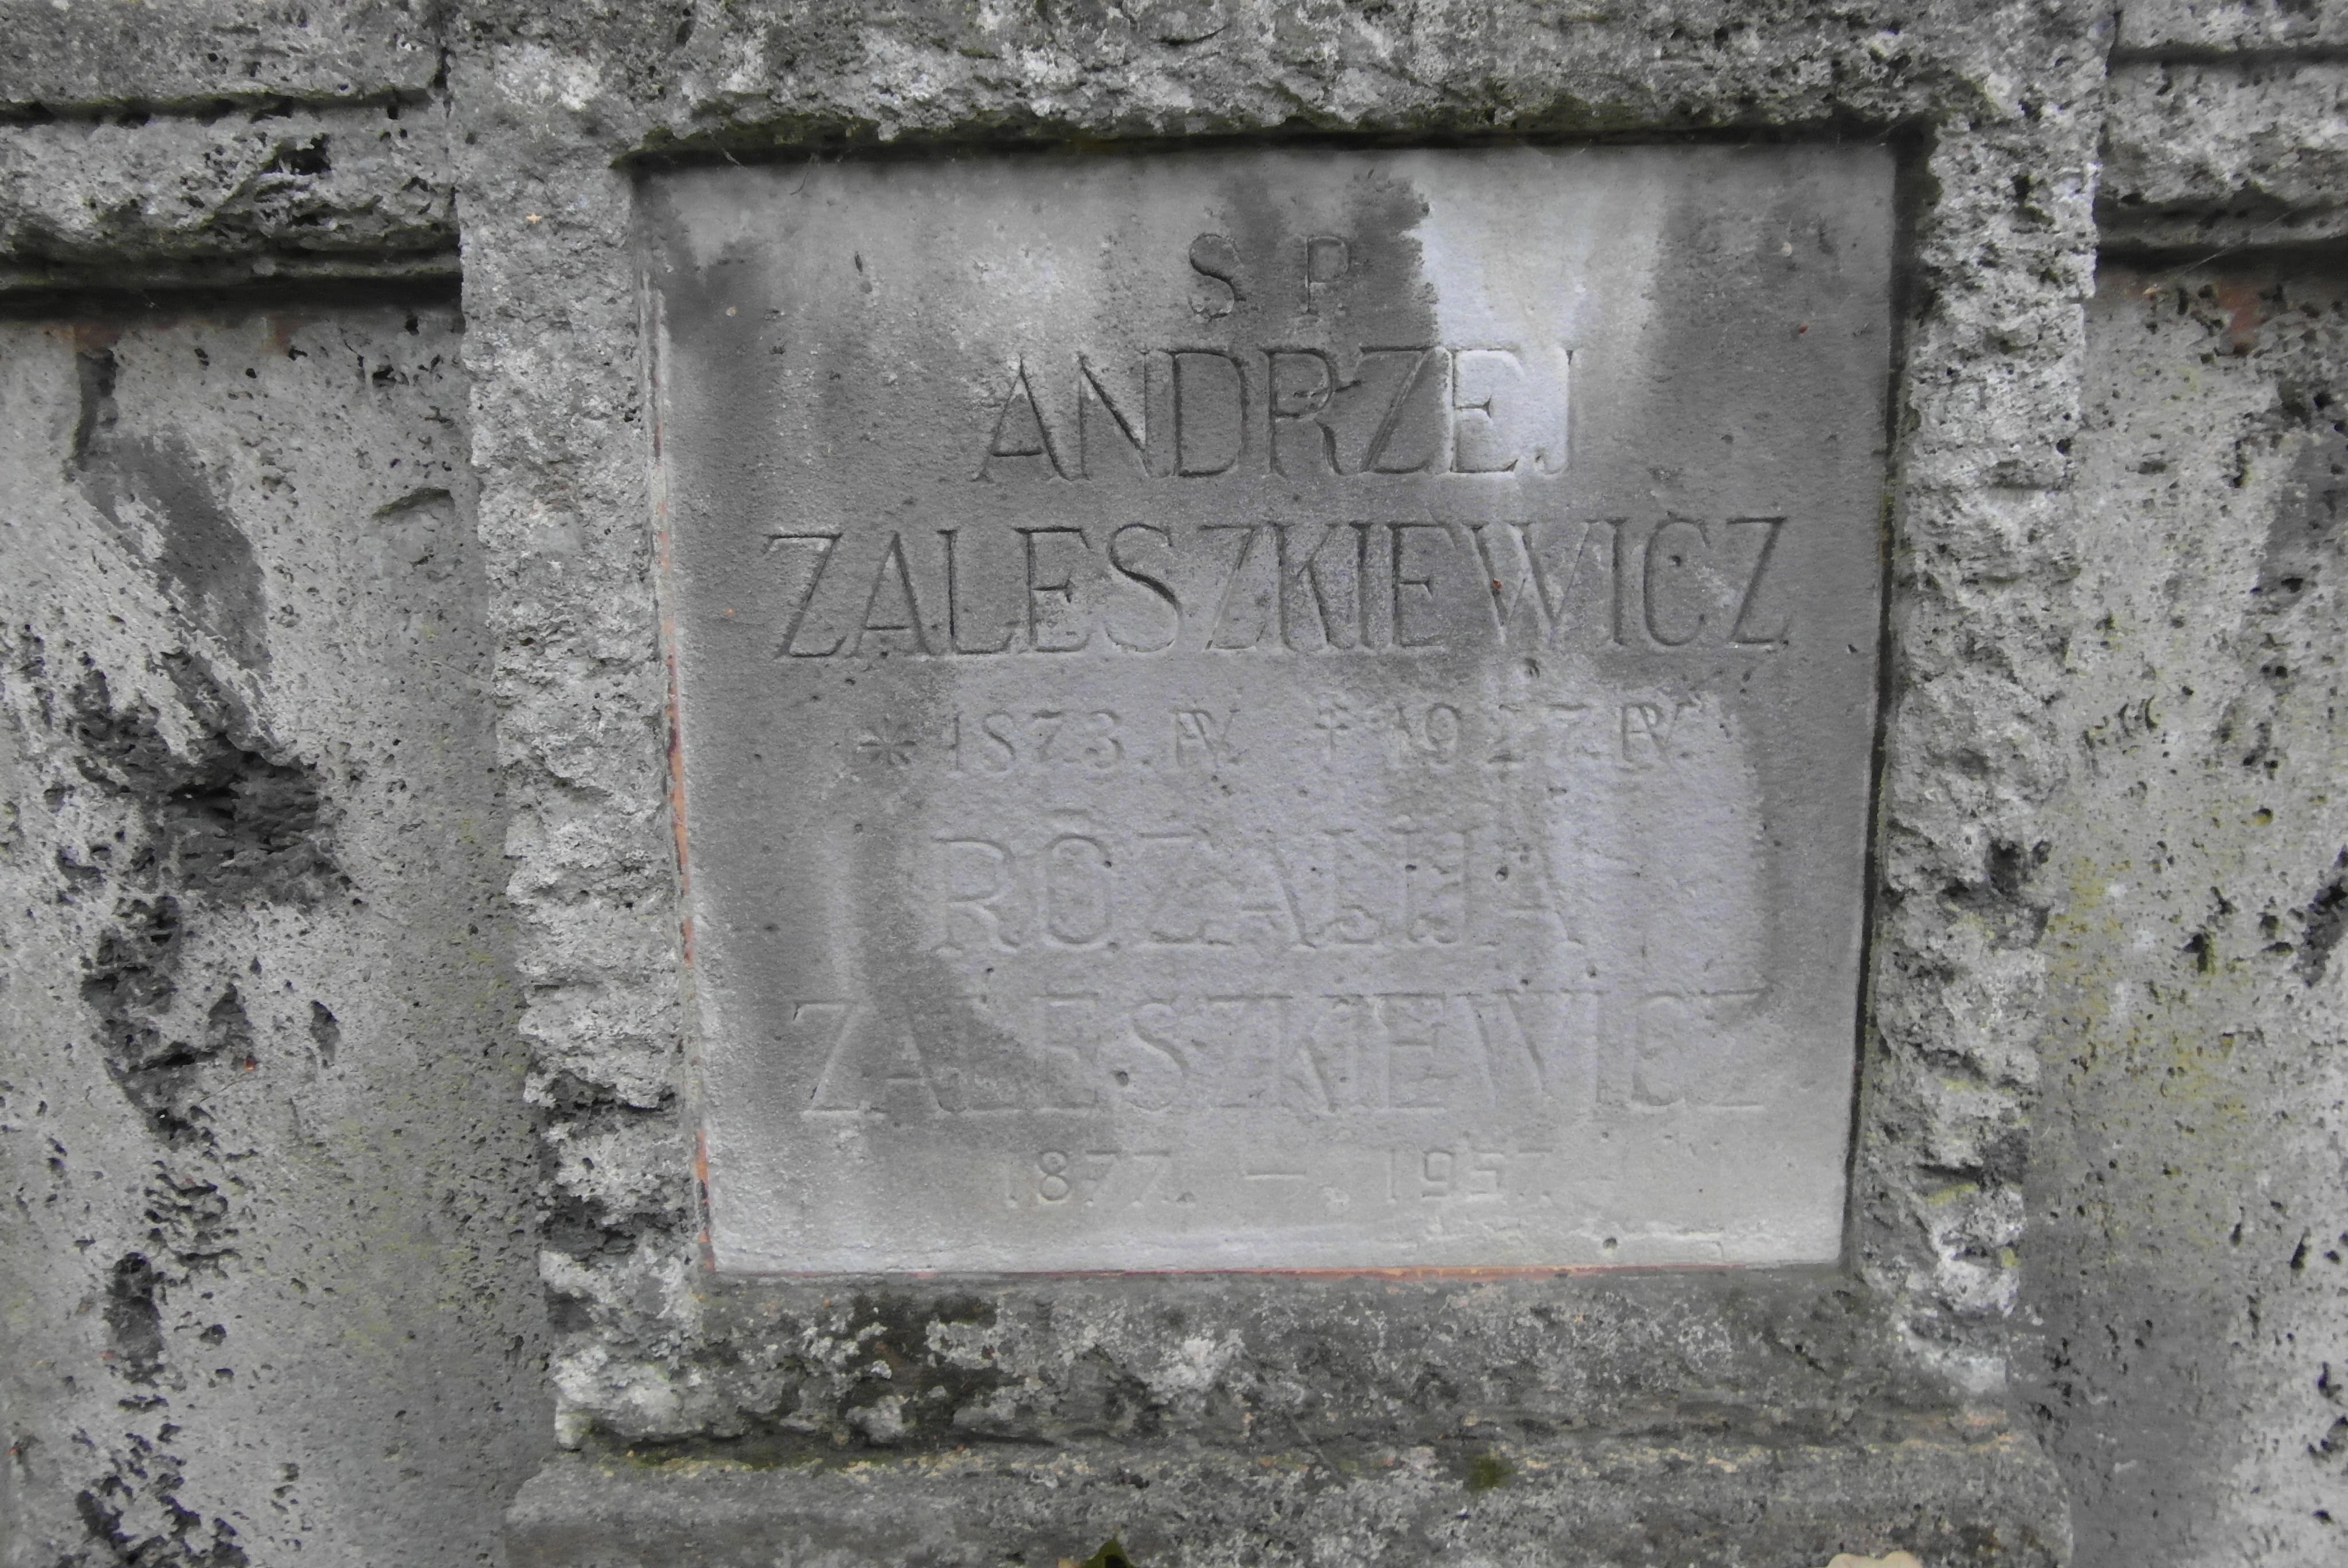 Inscription from the gravestone of Andrei Zaleskevich, Rozalia Zaleskevich, Genoveva Zaleskievics, St Michael's cemetery in Riga, as of 2021.